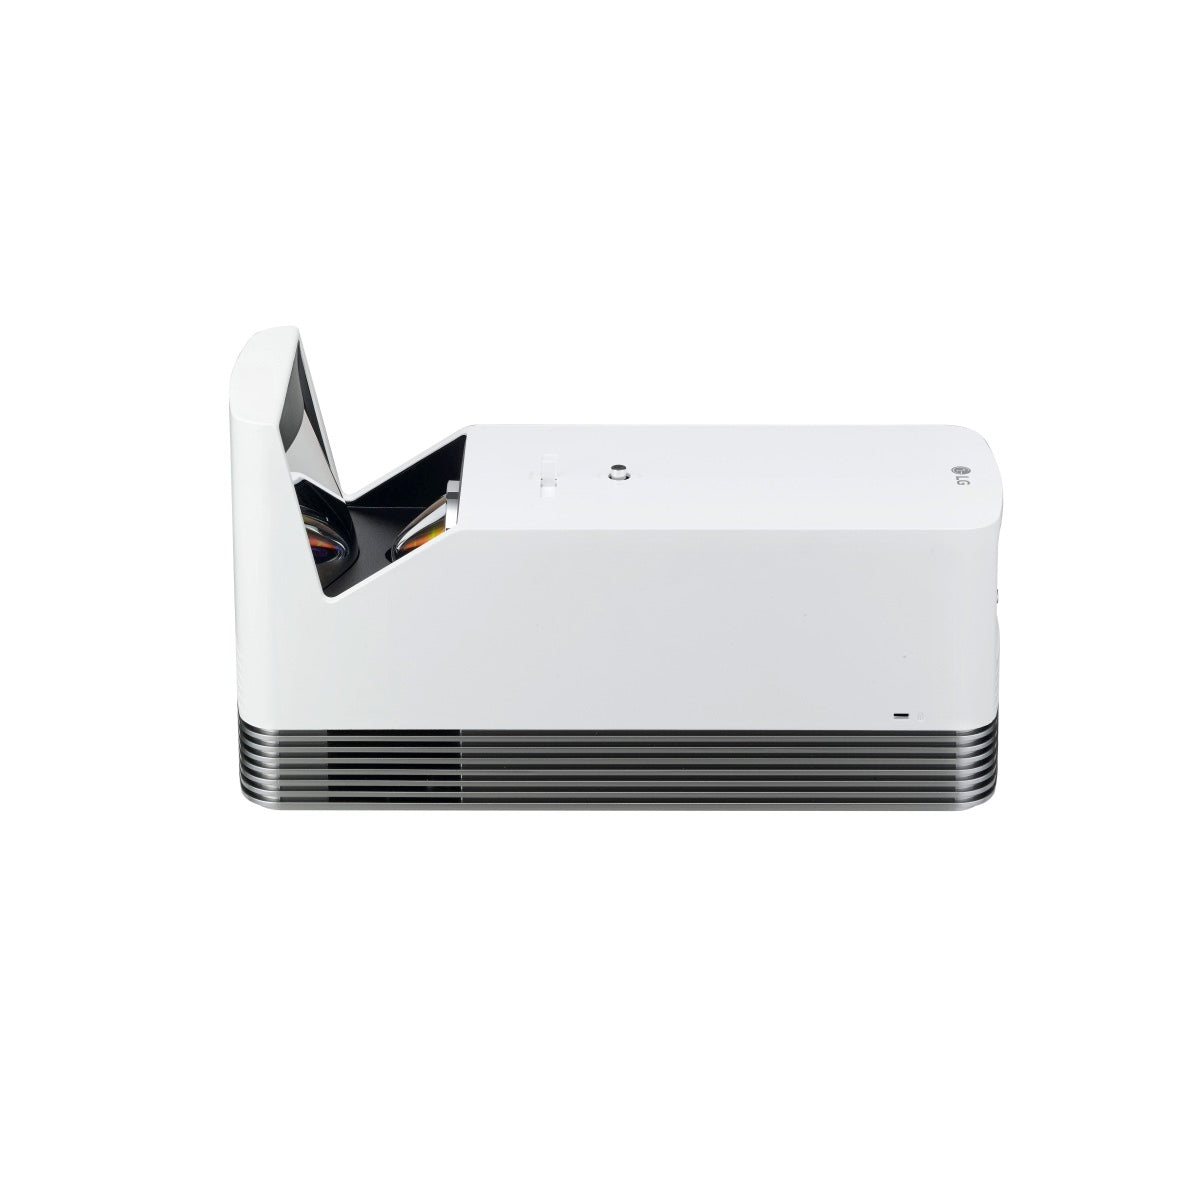 LG Projectors HF85JG - Ultra Short Throw Full HD Laser Home Theatre Projector - AVStore